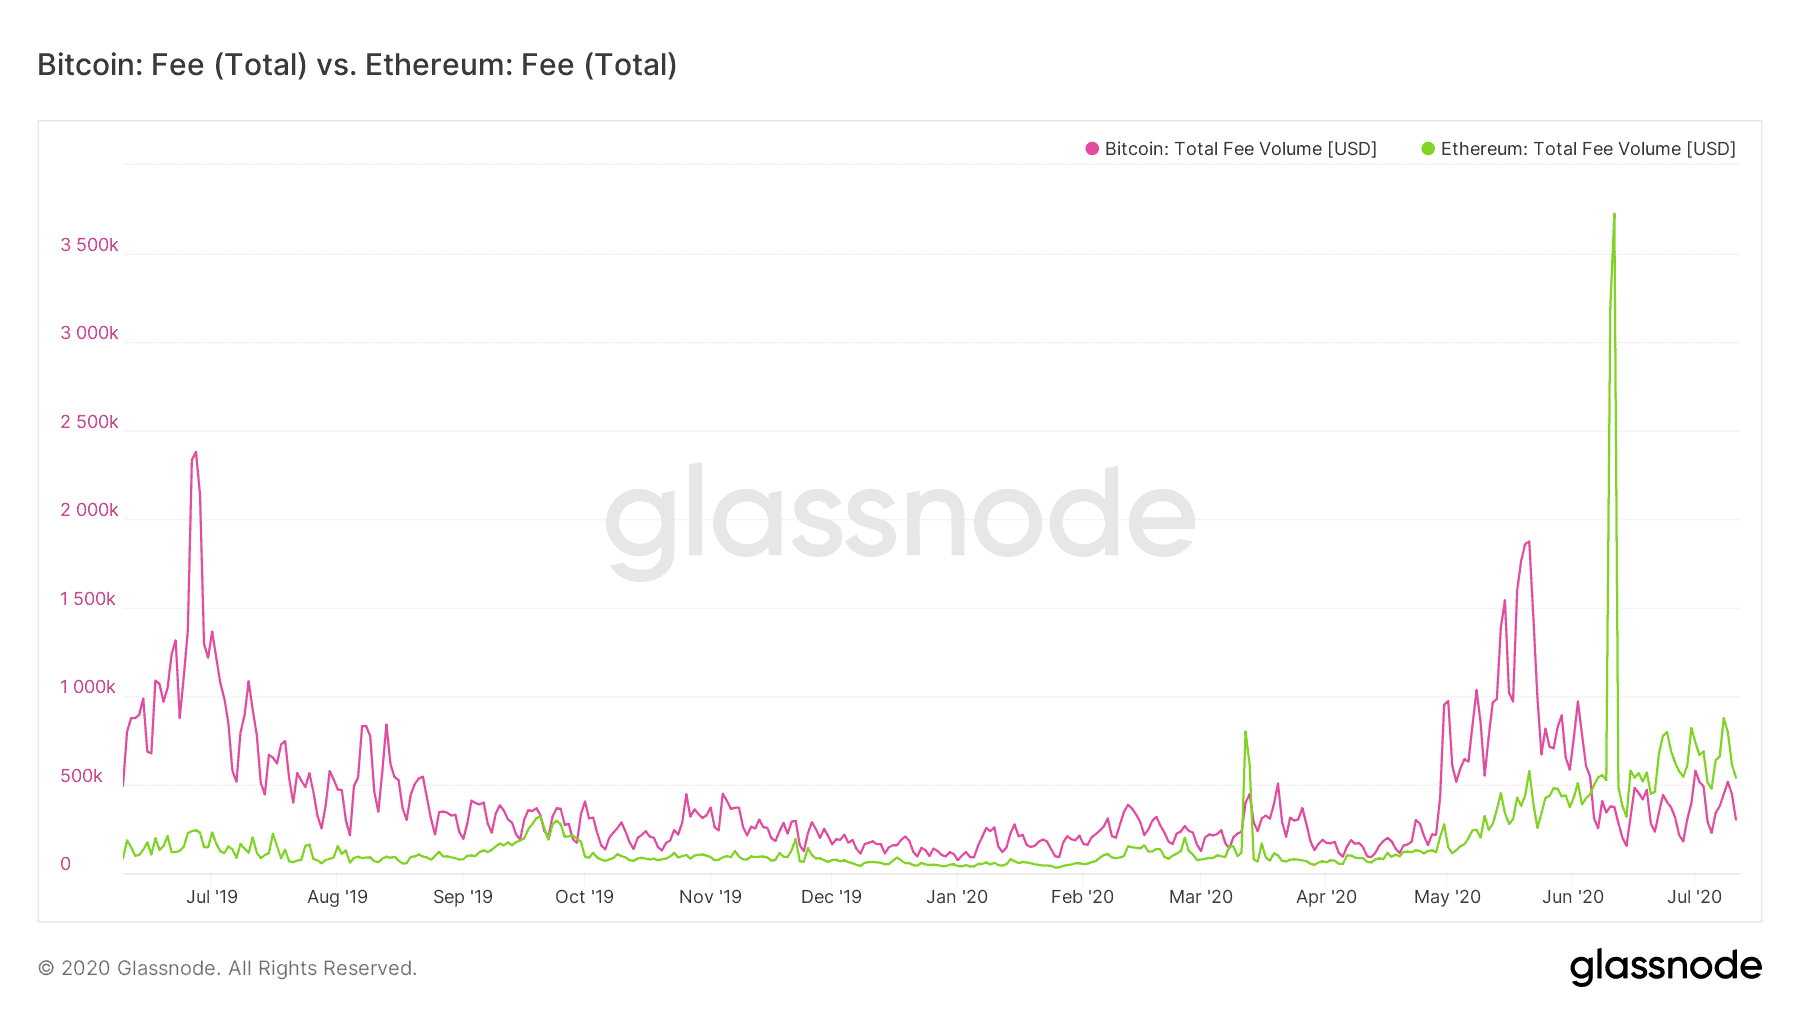 Volumen de tarifa total en Ethereum y Bitcoin. Fuente: Glassnode